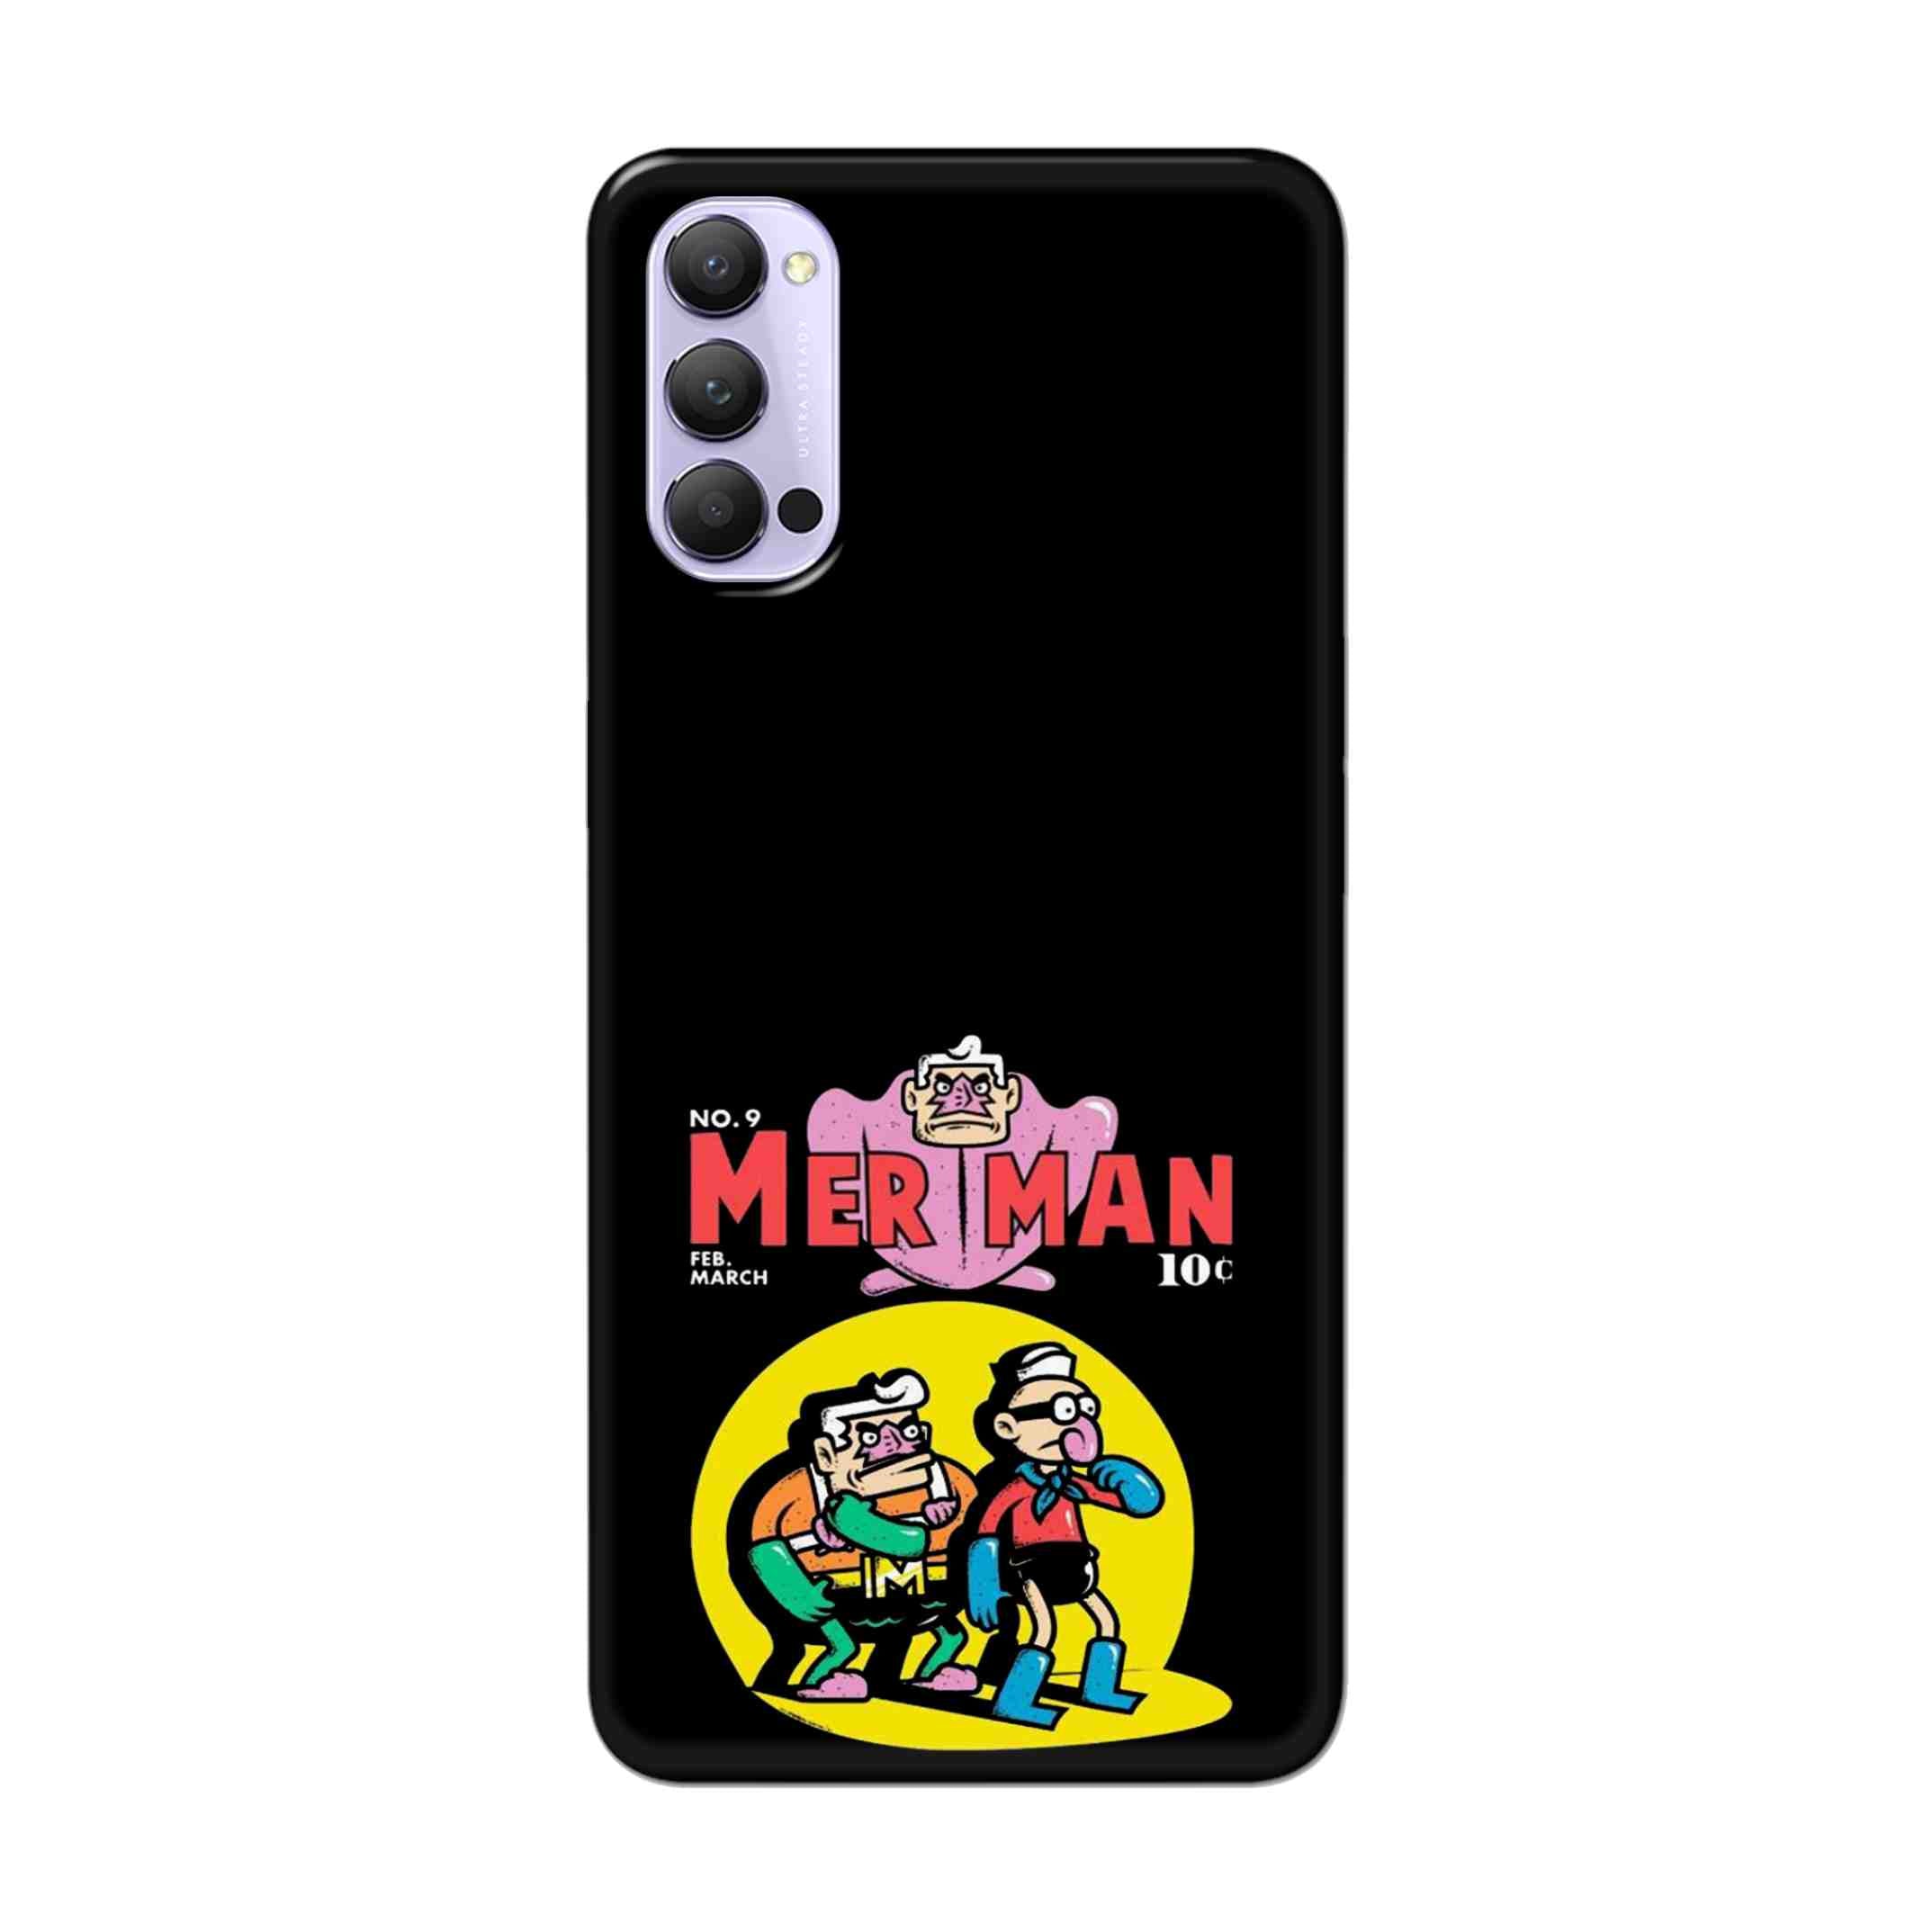 Buy Merman Hard Back Mobile Phone Case Cover For Oppo Reno 4 Pro Online